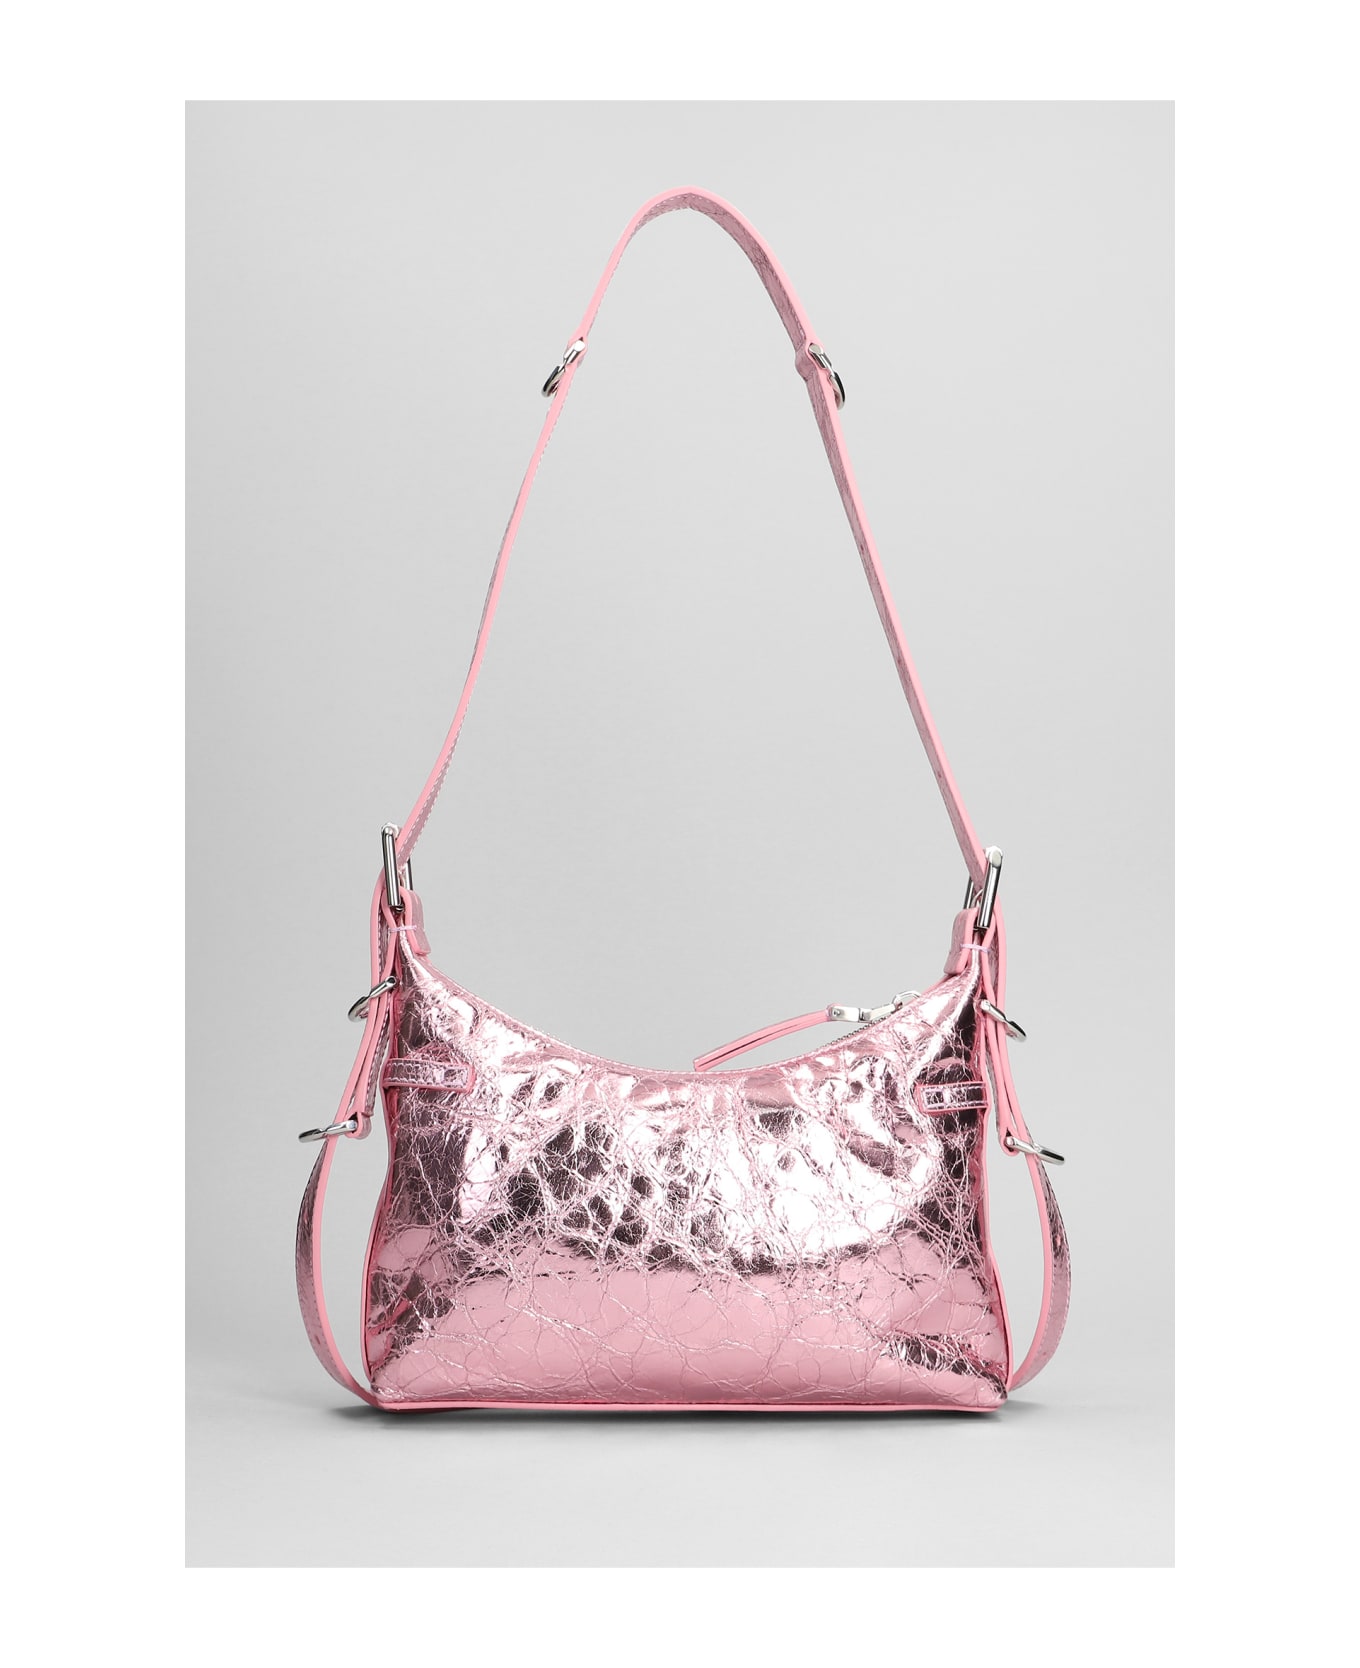 Givenchy Voyou Shoulder Bag - rose-pink ショルダーバッグ